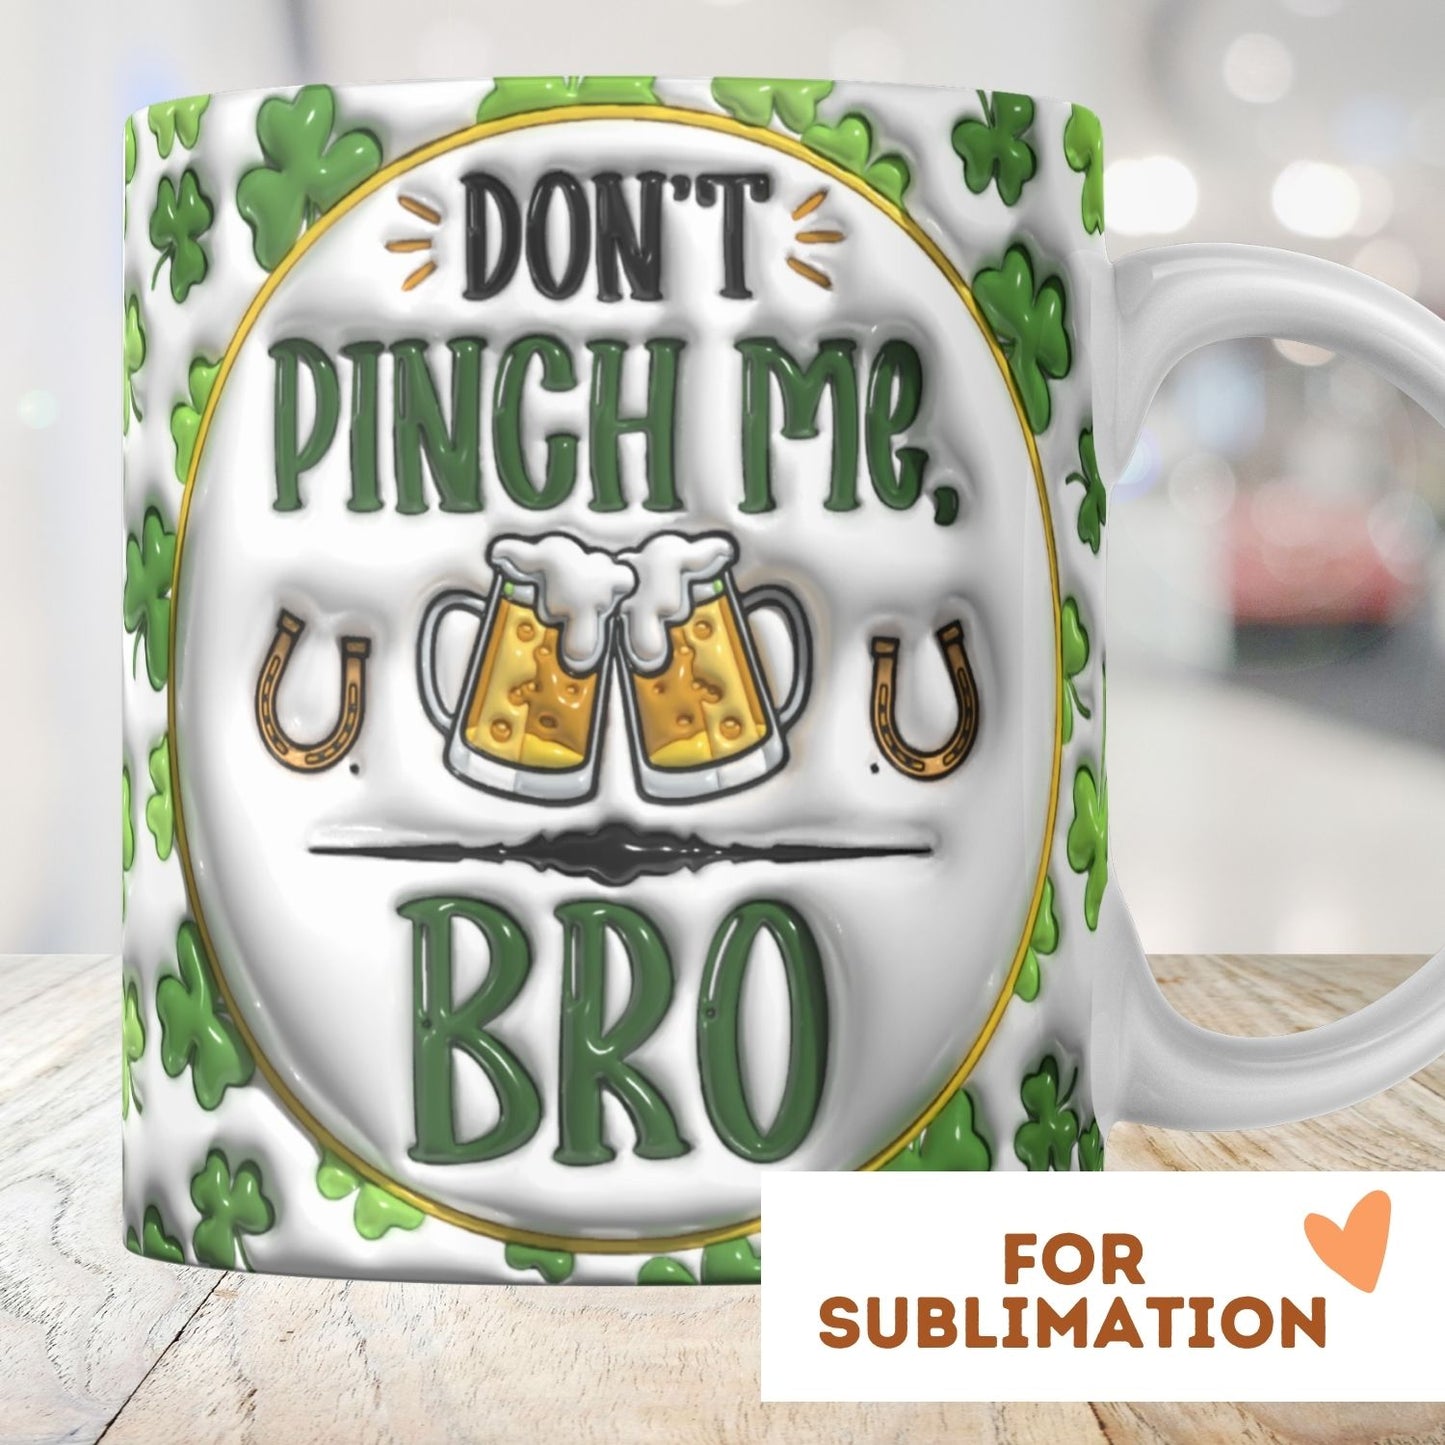 Irish Don't Pinch Me Bro - 3D